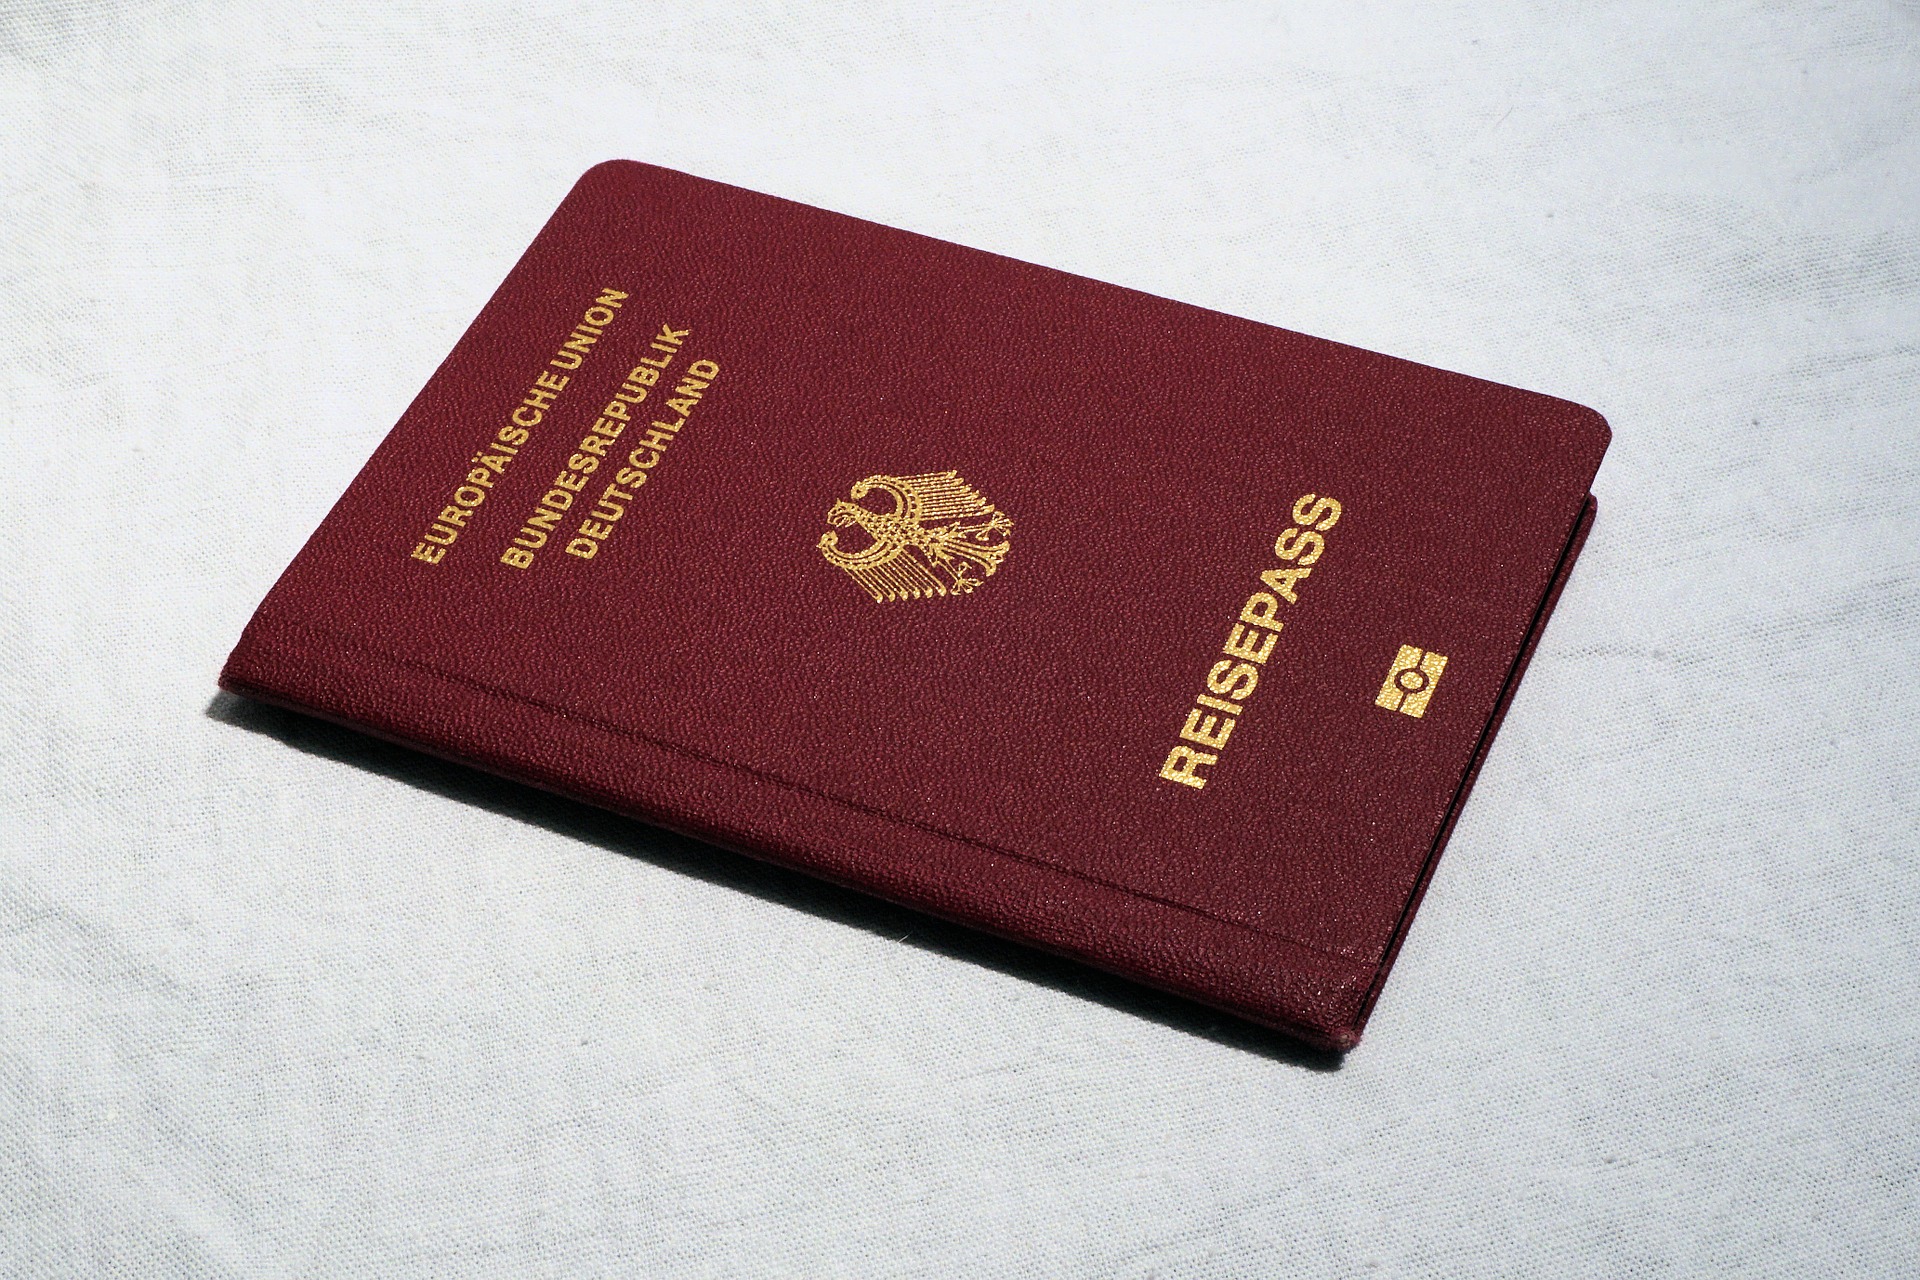 Germany Passport Rank